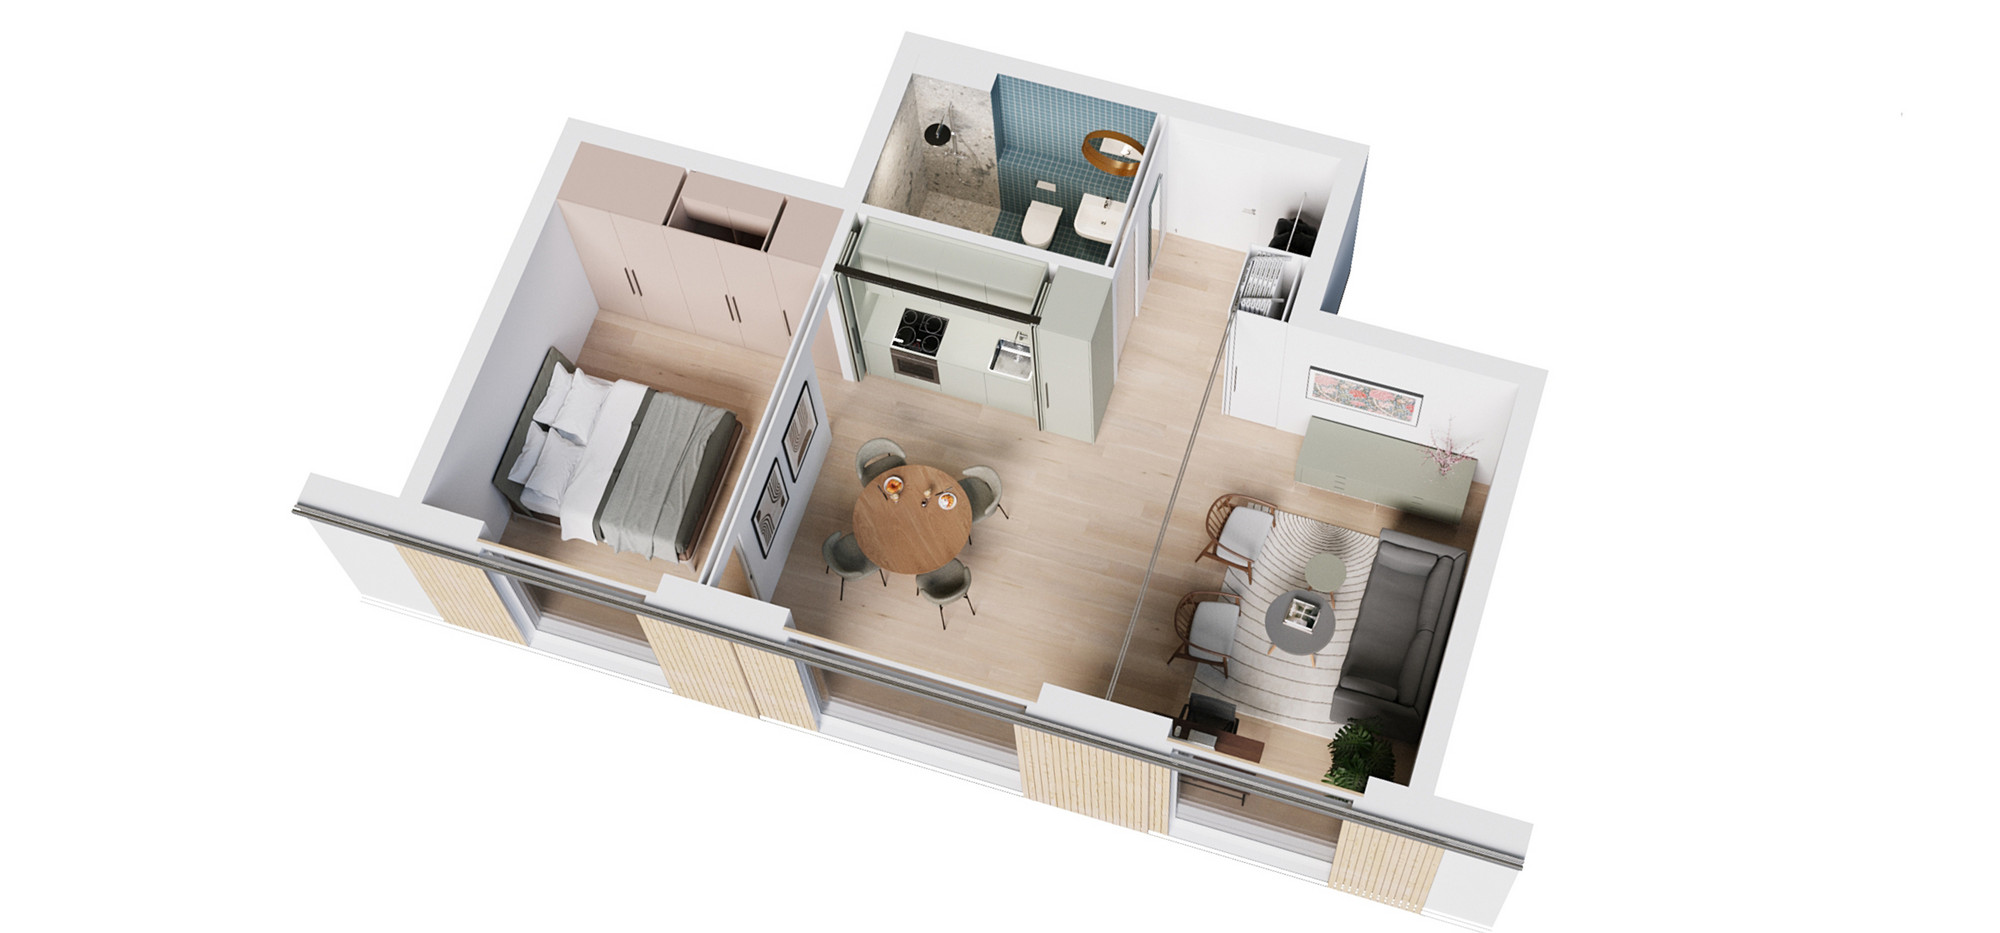 Small apartment tiny house